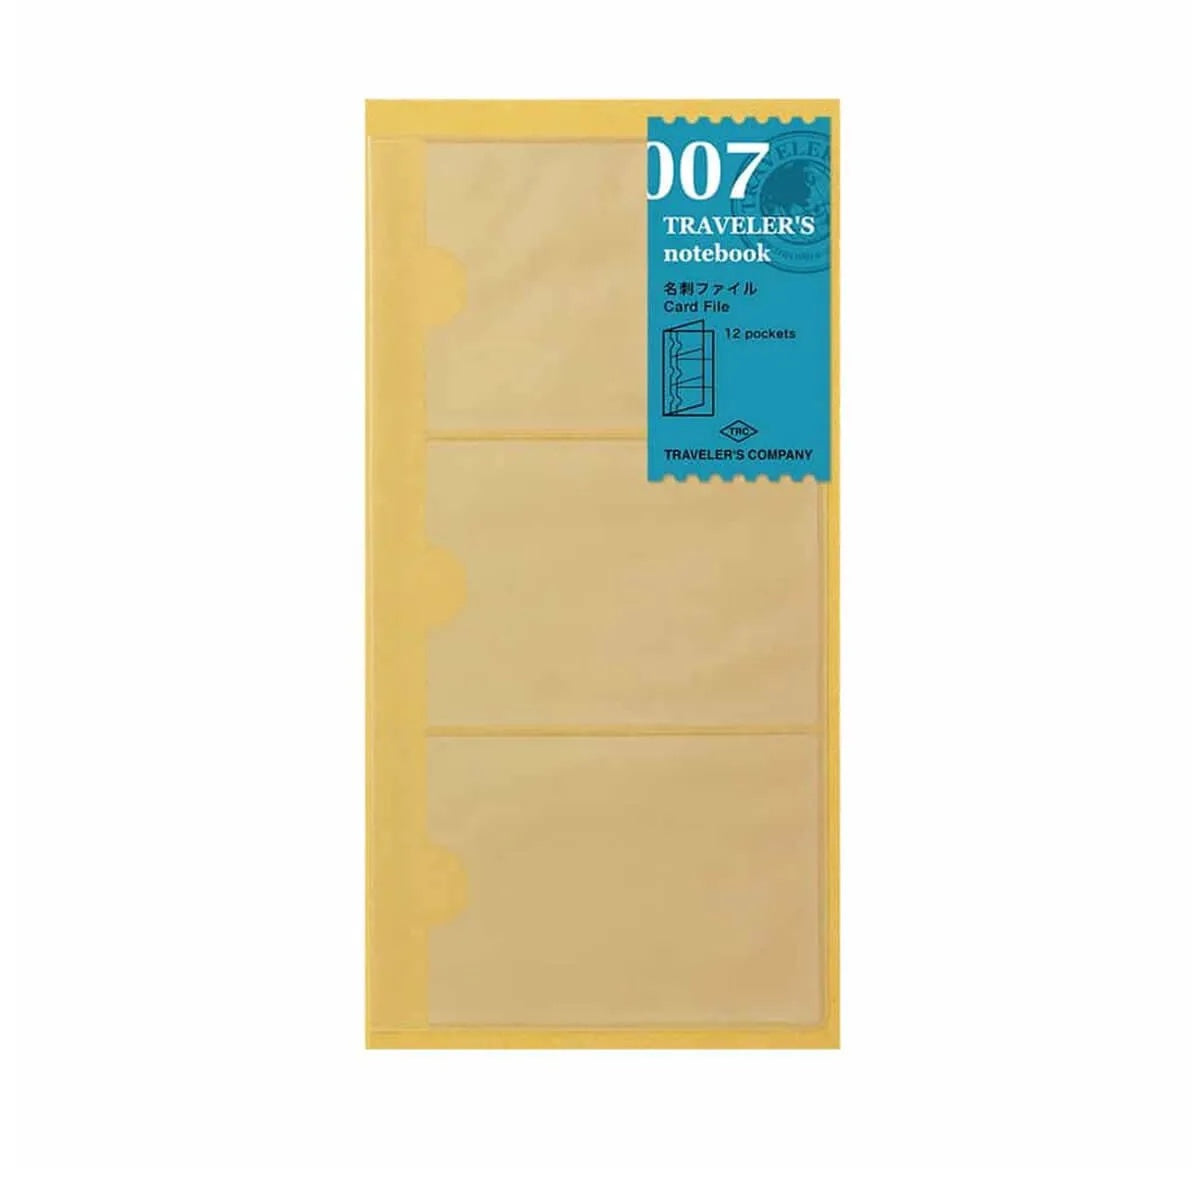 007 Card File - TRAVELER'S Notebook Insert